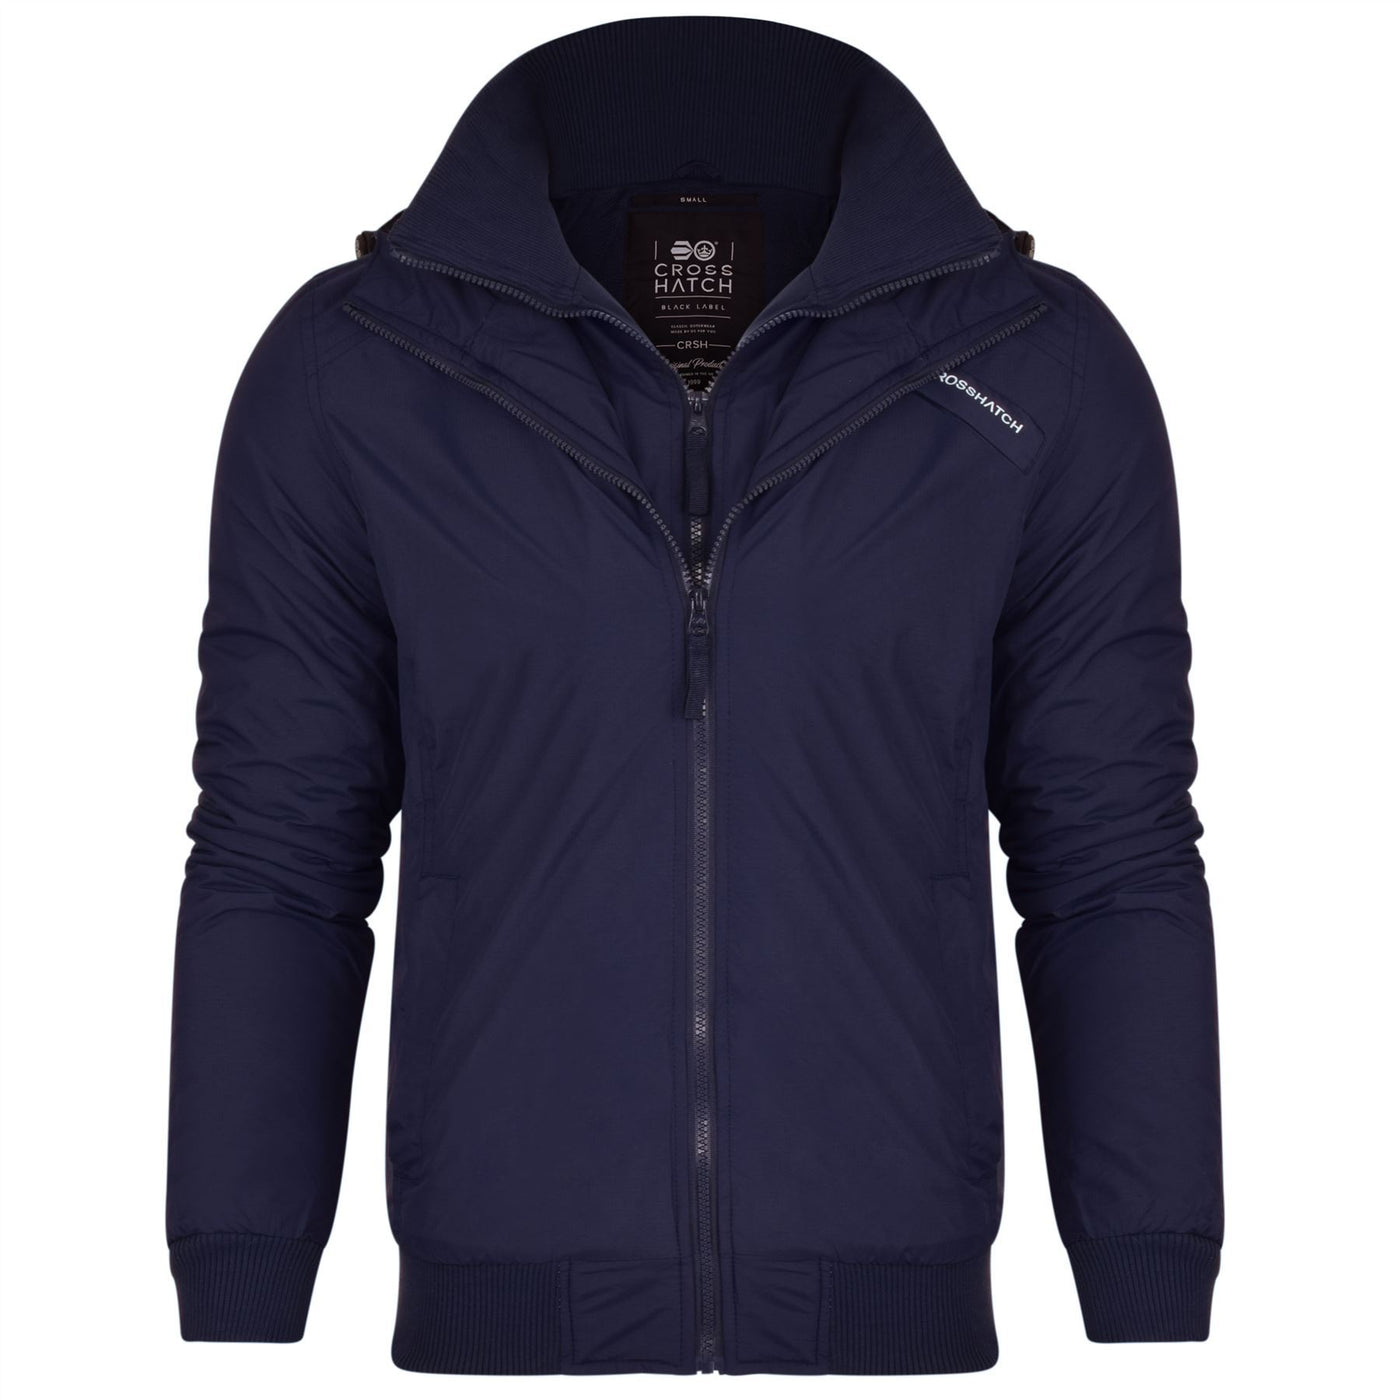 Crosshatch Mens Hooded Jacket | Fleece Lined Body| Double Layer Coat Hoodie Zipped Wind Breaker Zip Pockets